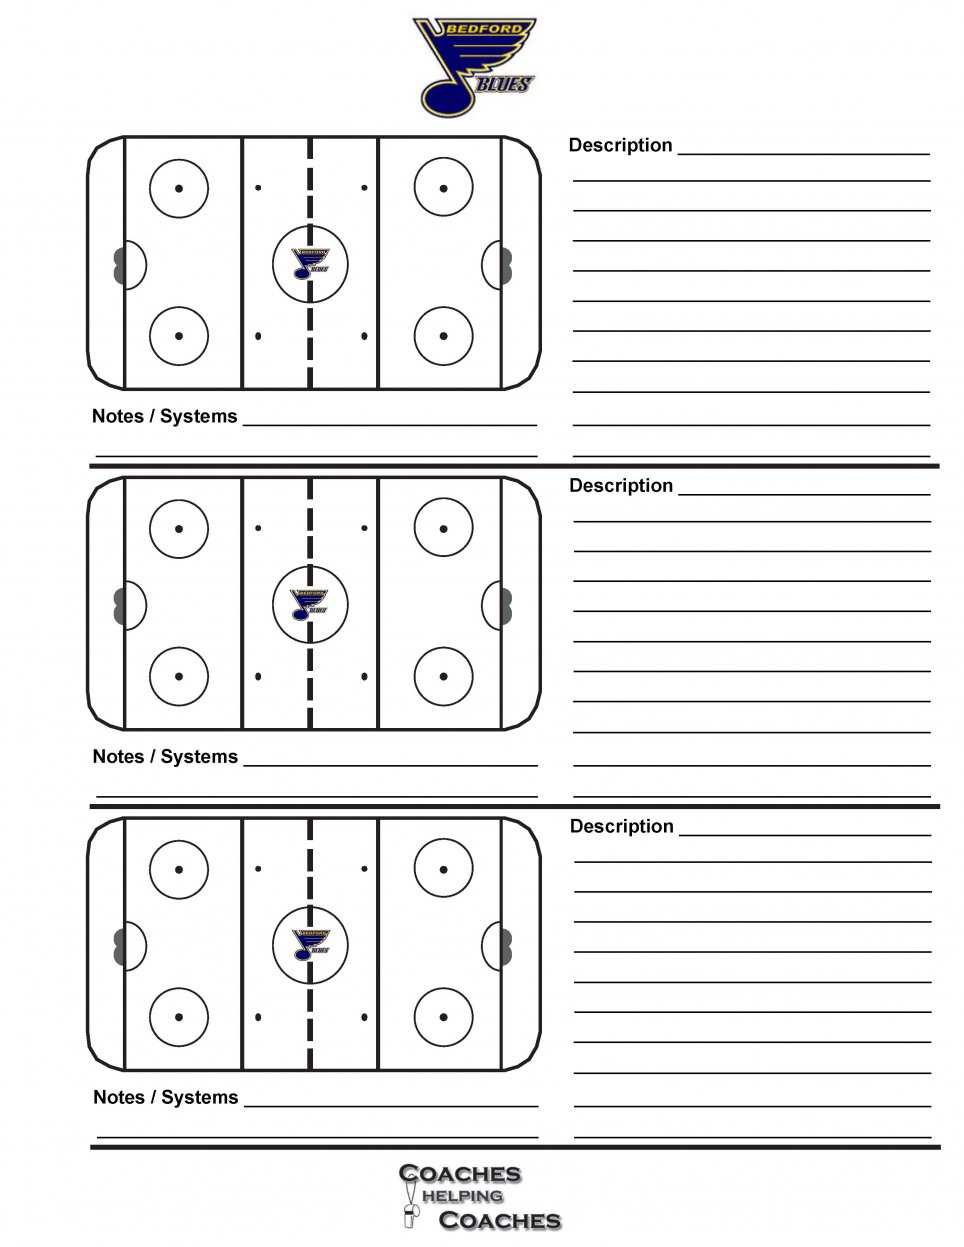 Bedford Minor Hockey Association Hockey Poweredgoalline.ca In Blank Hockey Practice Plan Template